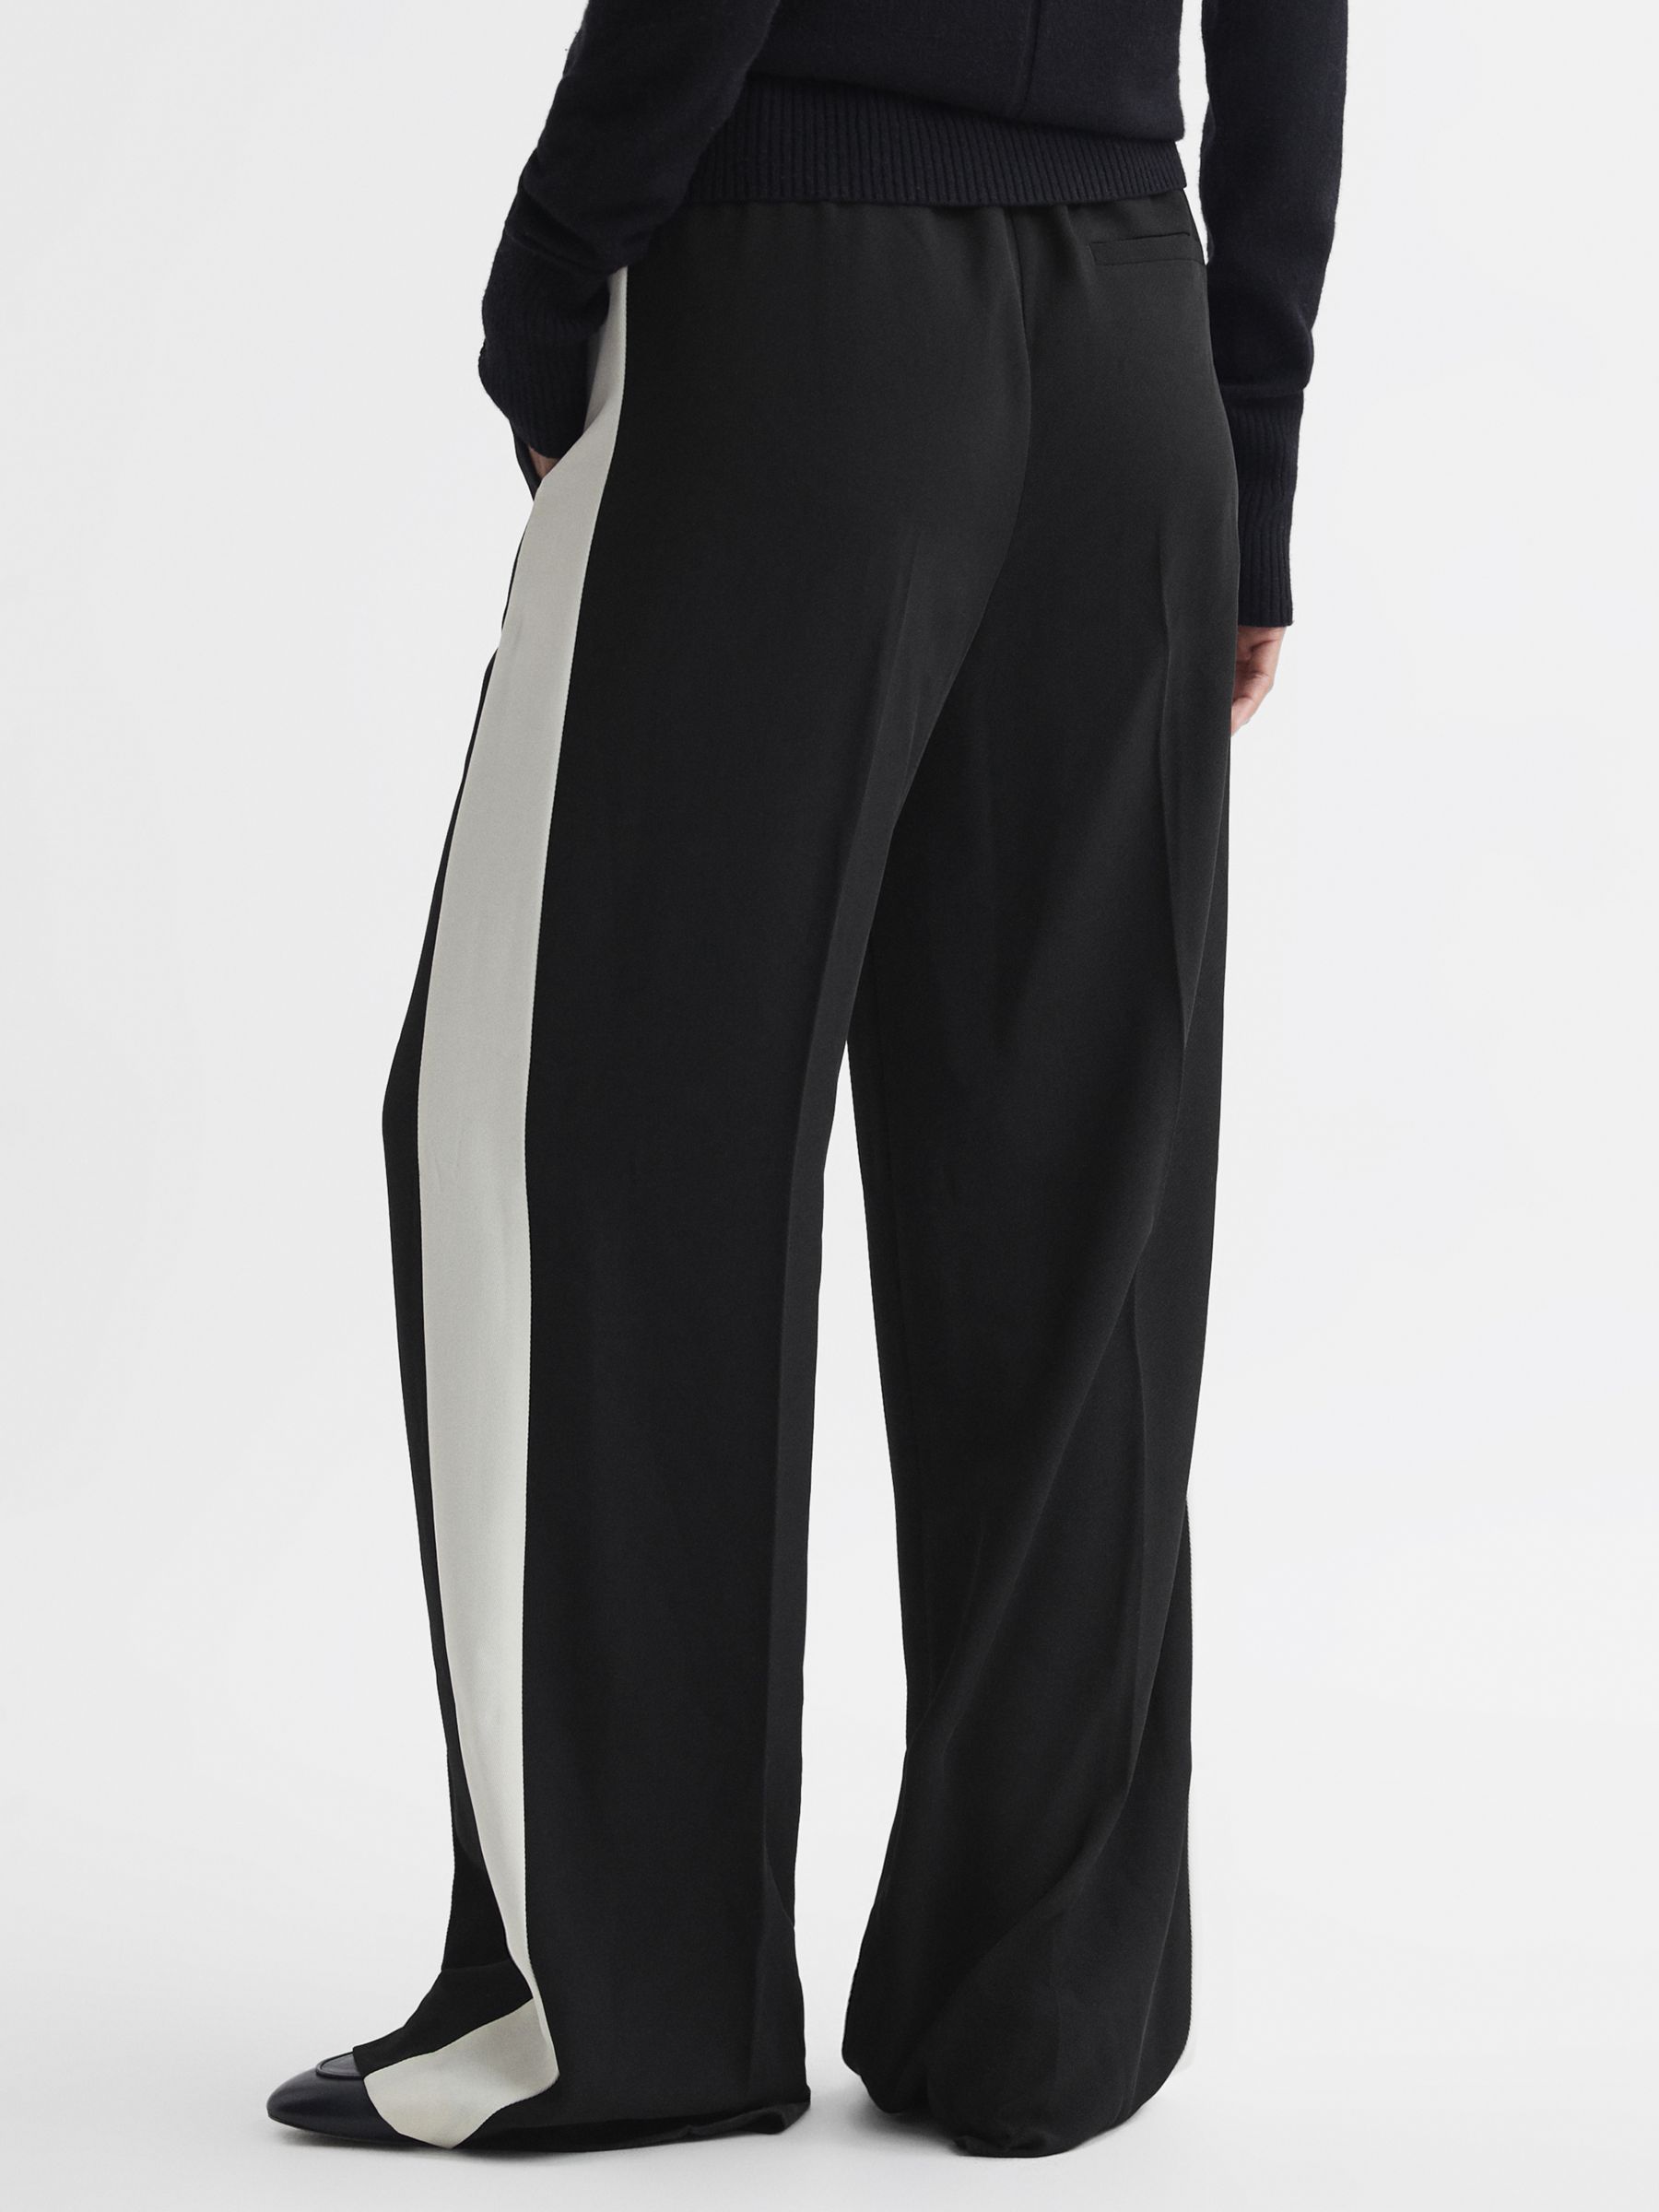 Reiss Petite May Stripe Wide Leg Trousers, Black at John Lewis & Partners